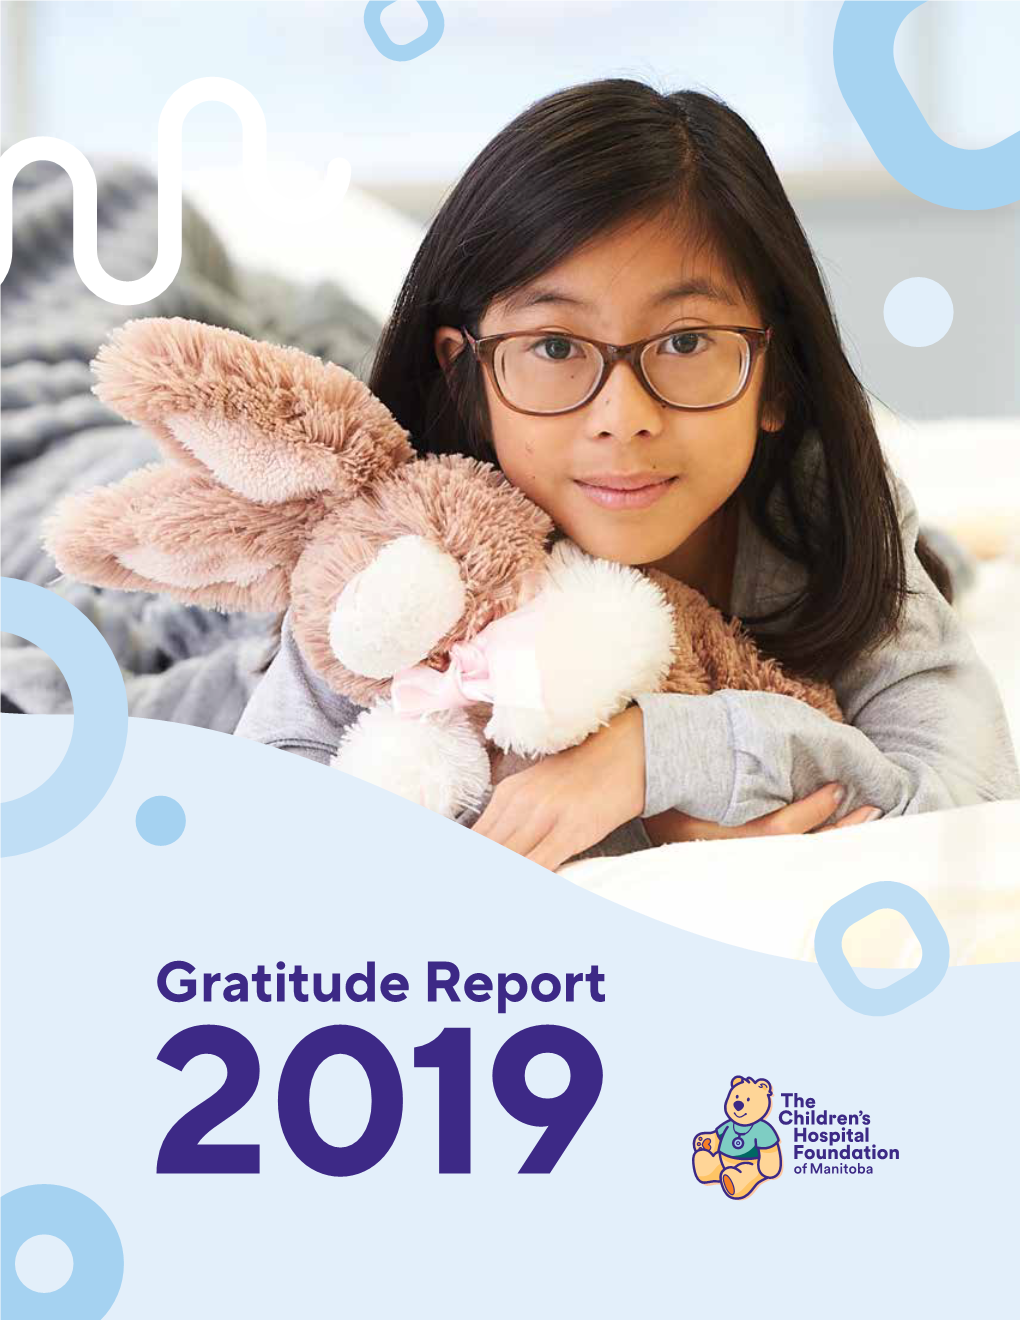 Gratitude Report 2019 Gianna Was the CHFM 2019 Champion Child